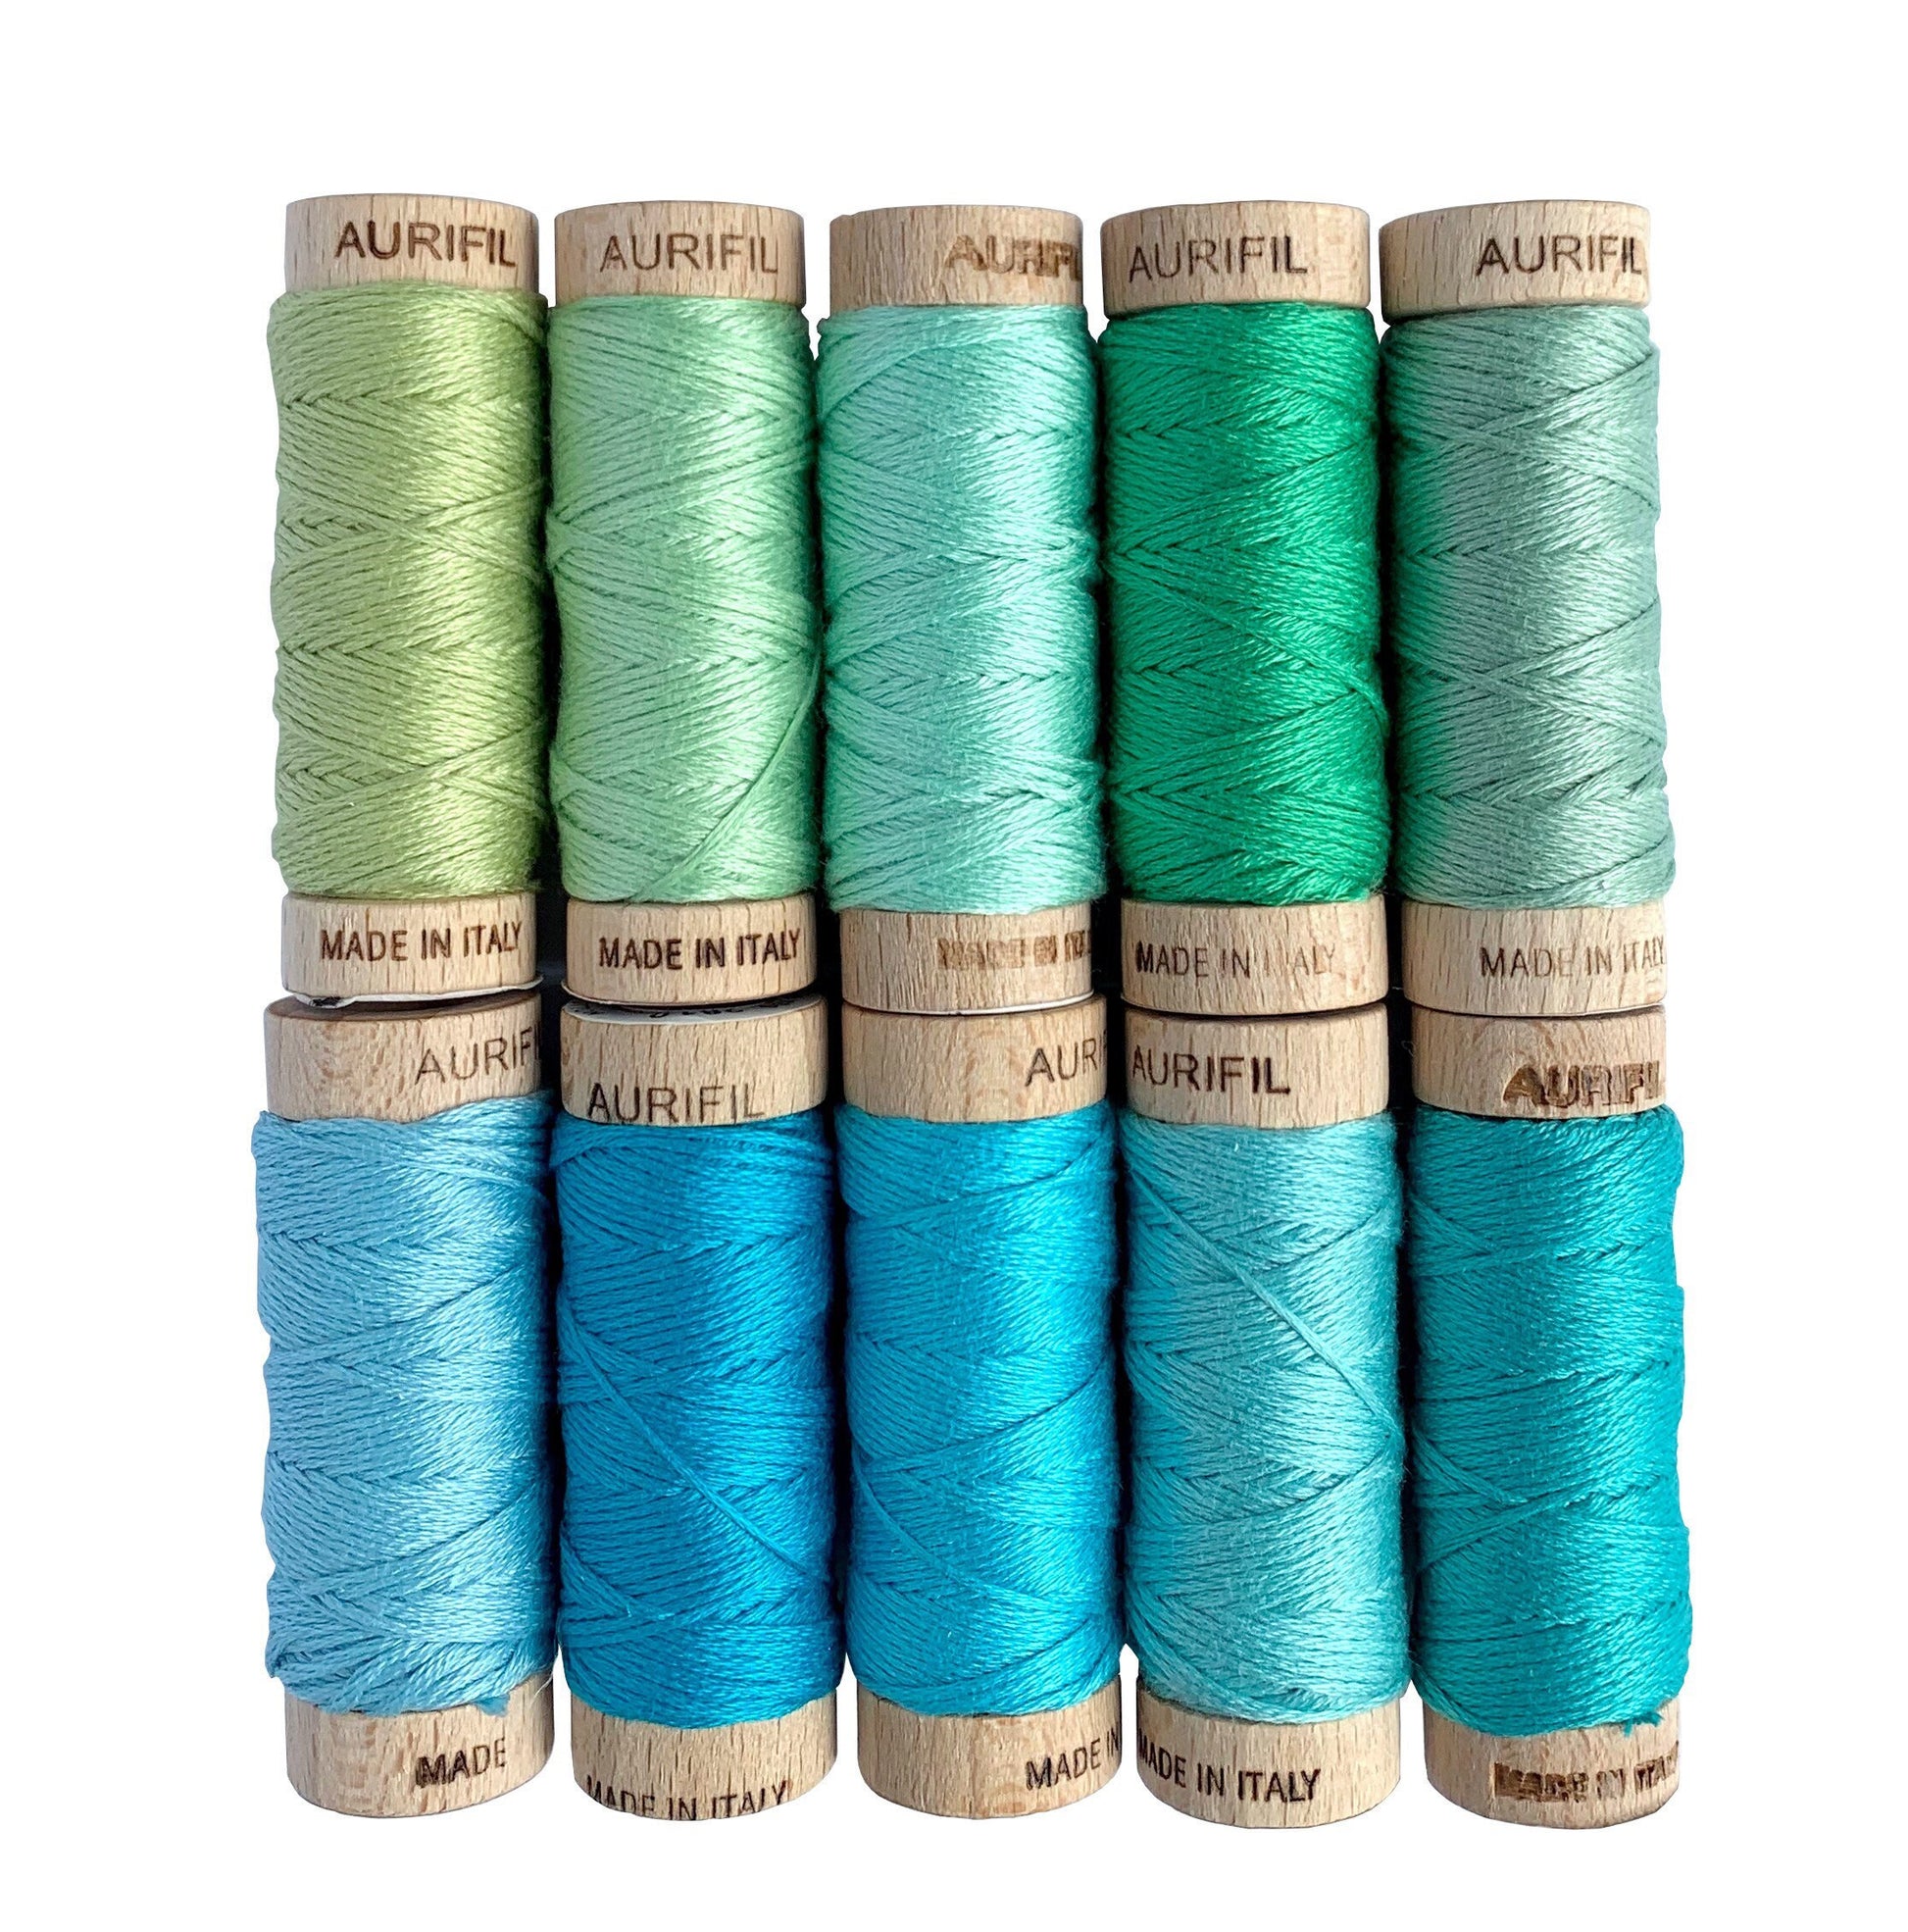 Seaside Blues Aurifil Thread Floss Collection - Susan Ache - 10 Small Spools 6 strand floss